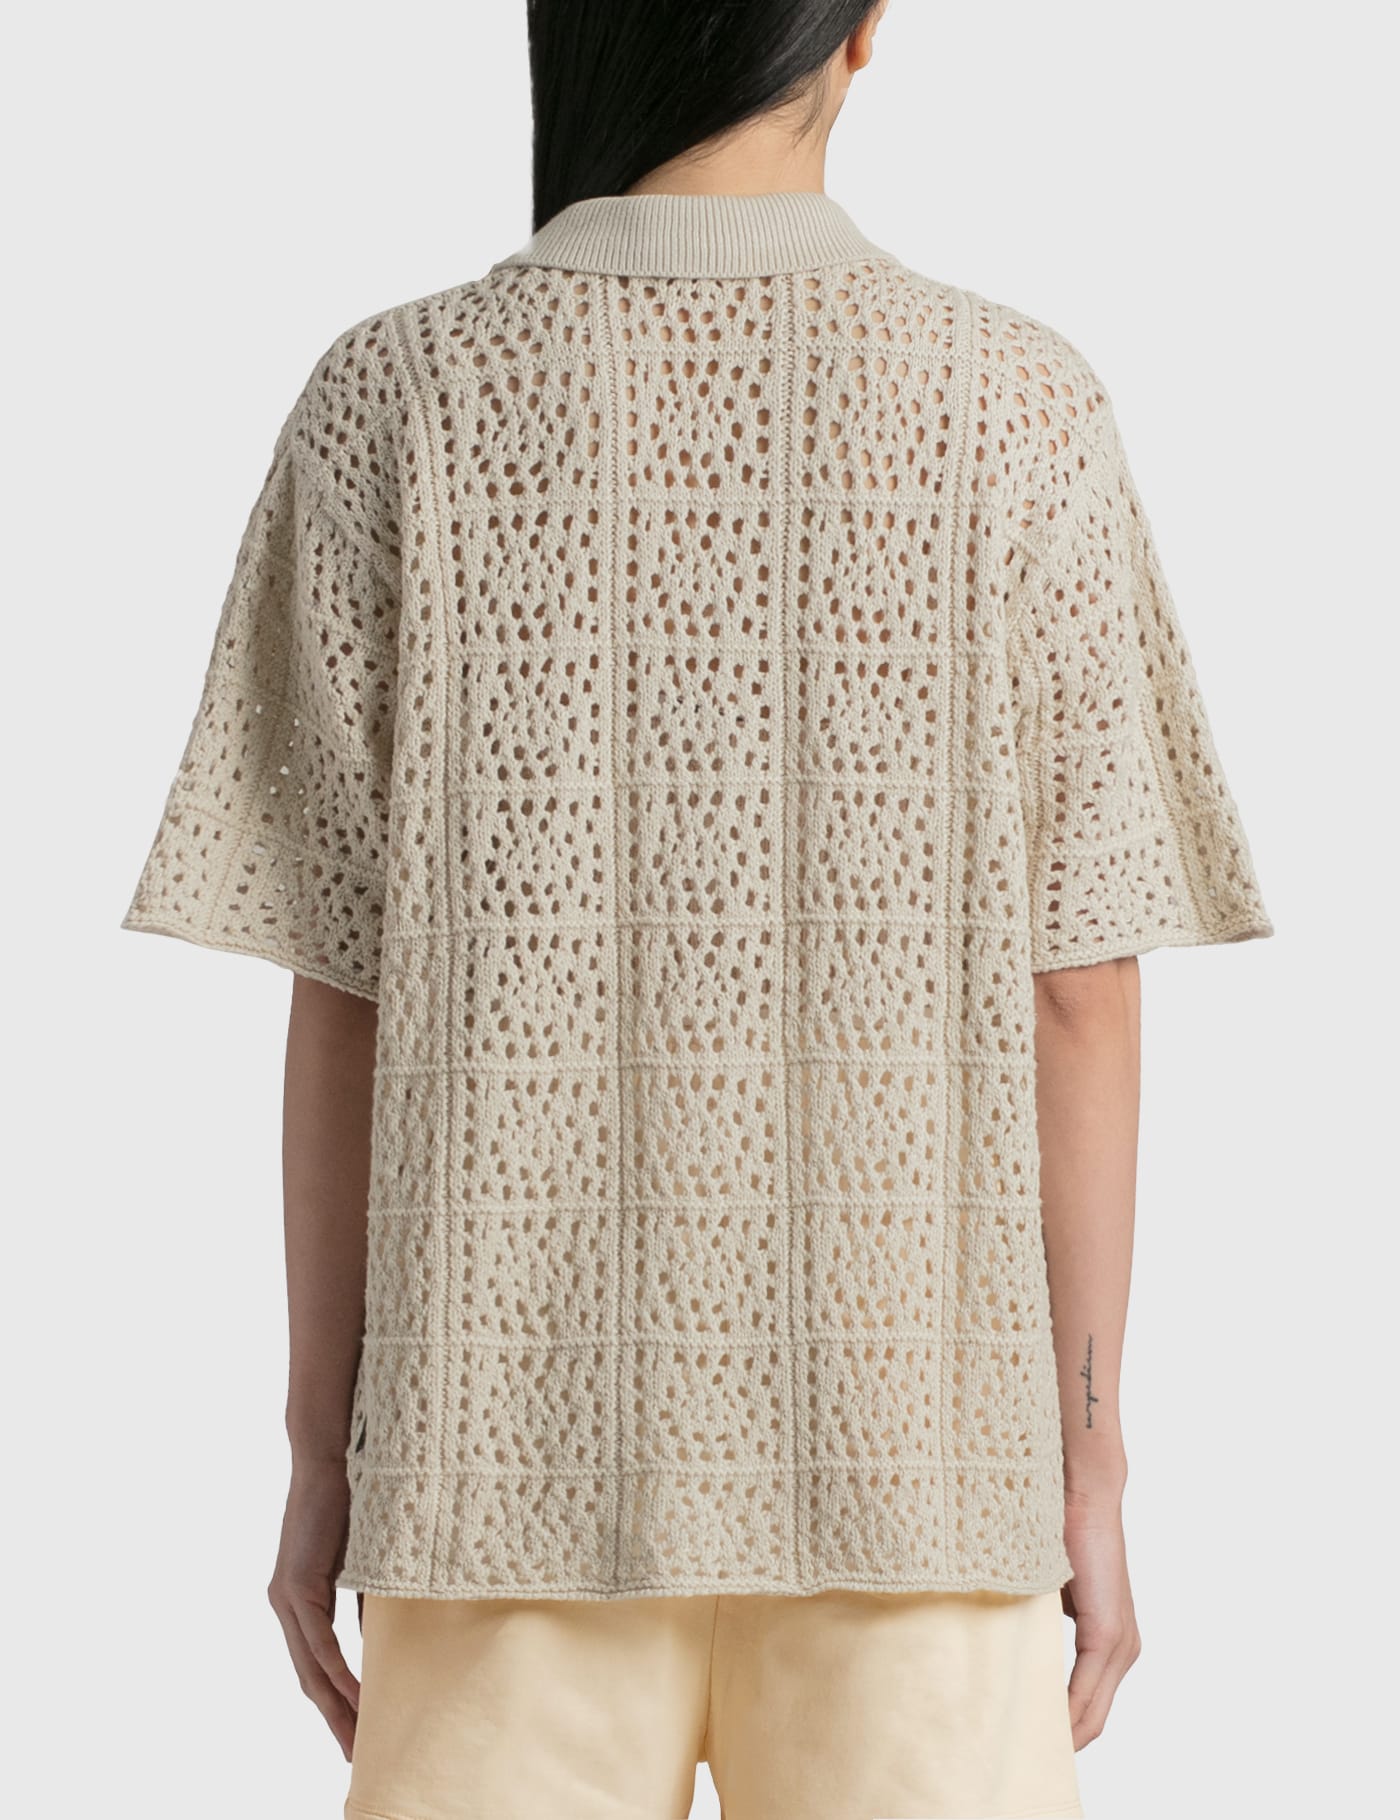 Stüssy - Crochet Shirt | HBX - Globally Curated Fashion and